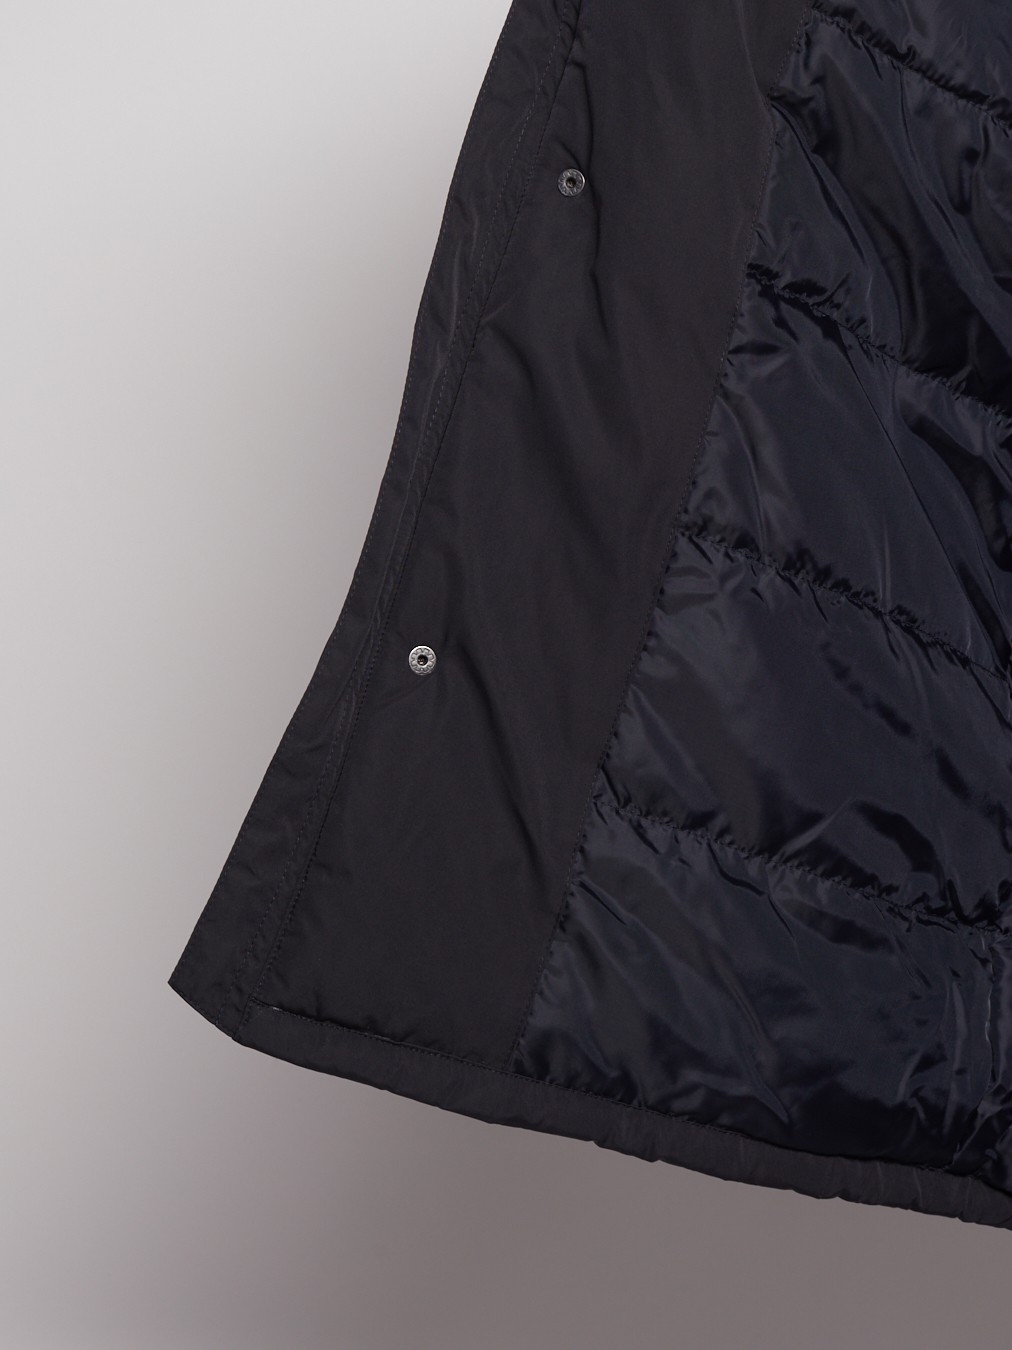 Утеплённое пальто-тренч zolla 012335202014, цвет темно-синий, размер S - фото 3